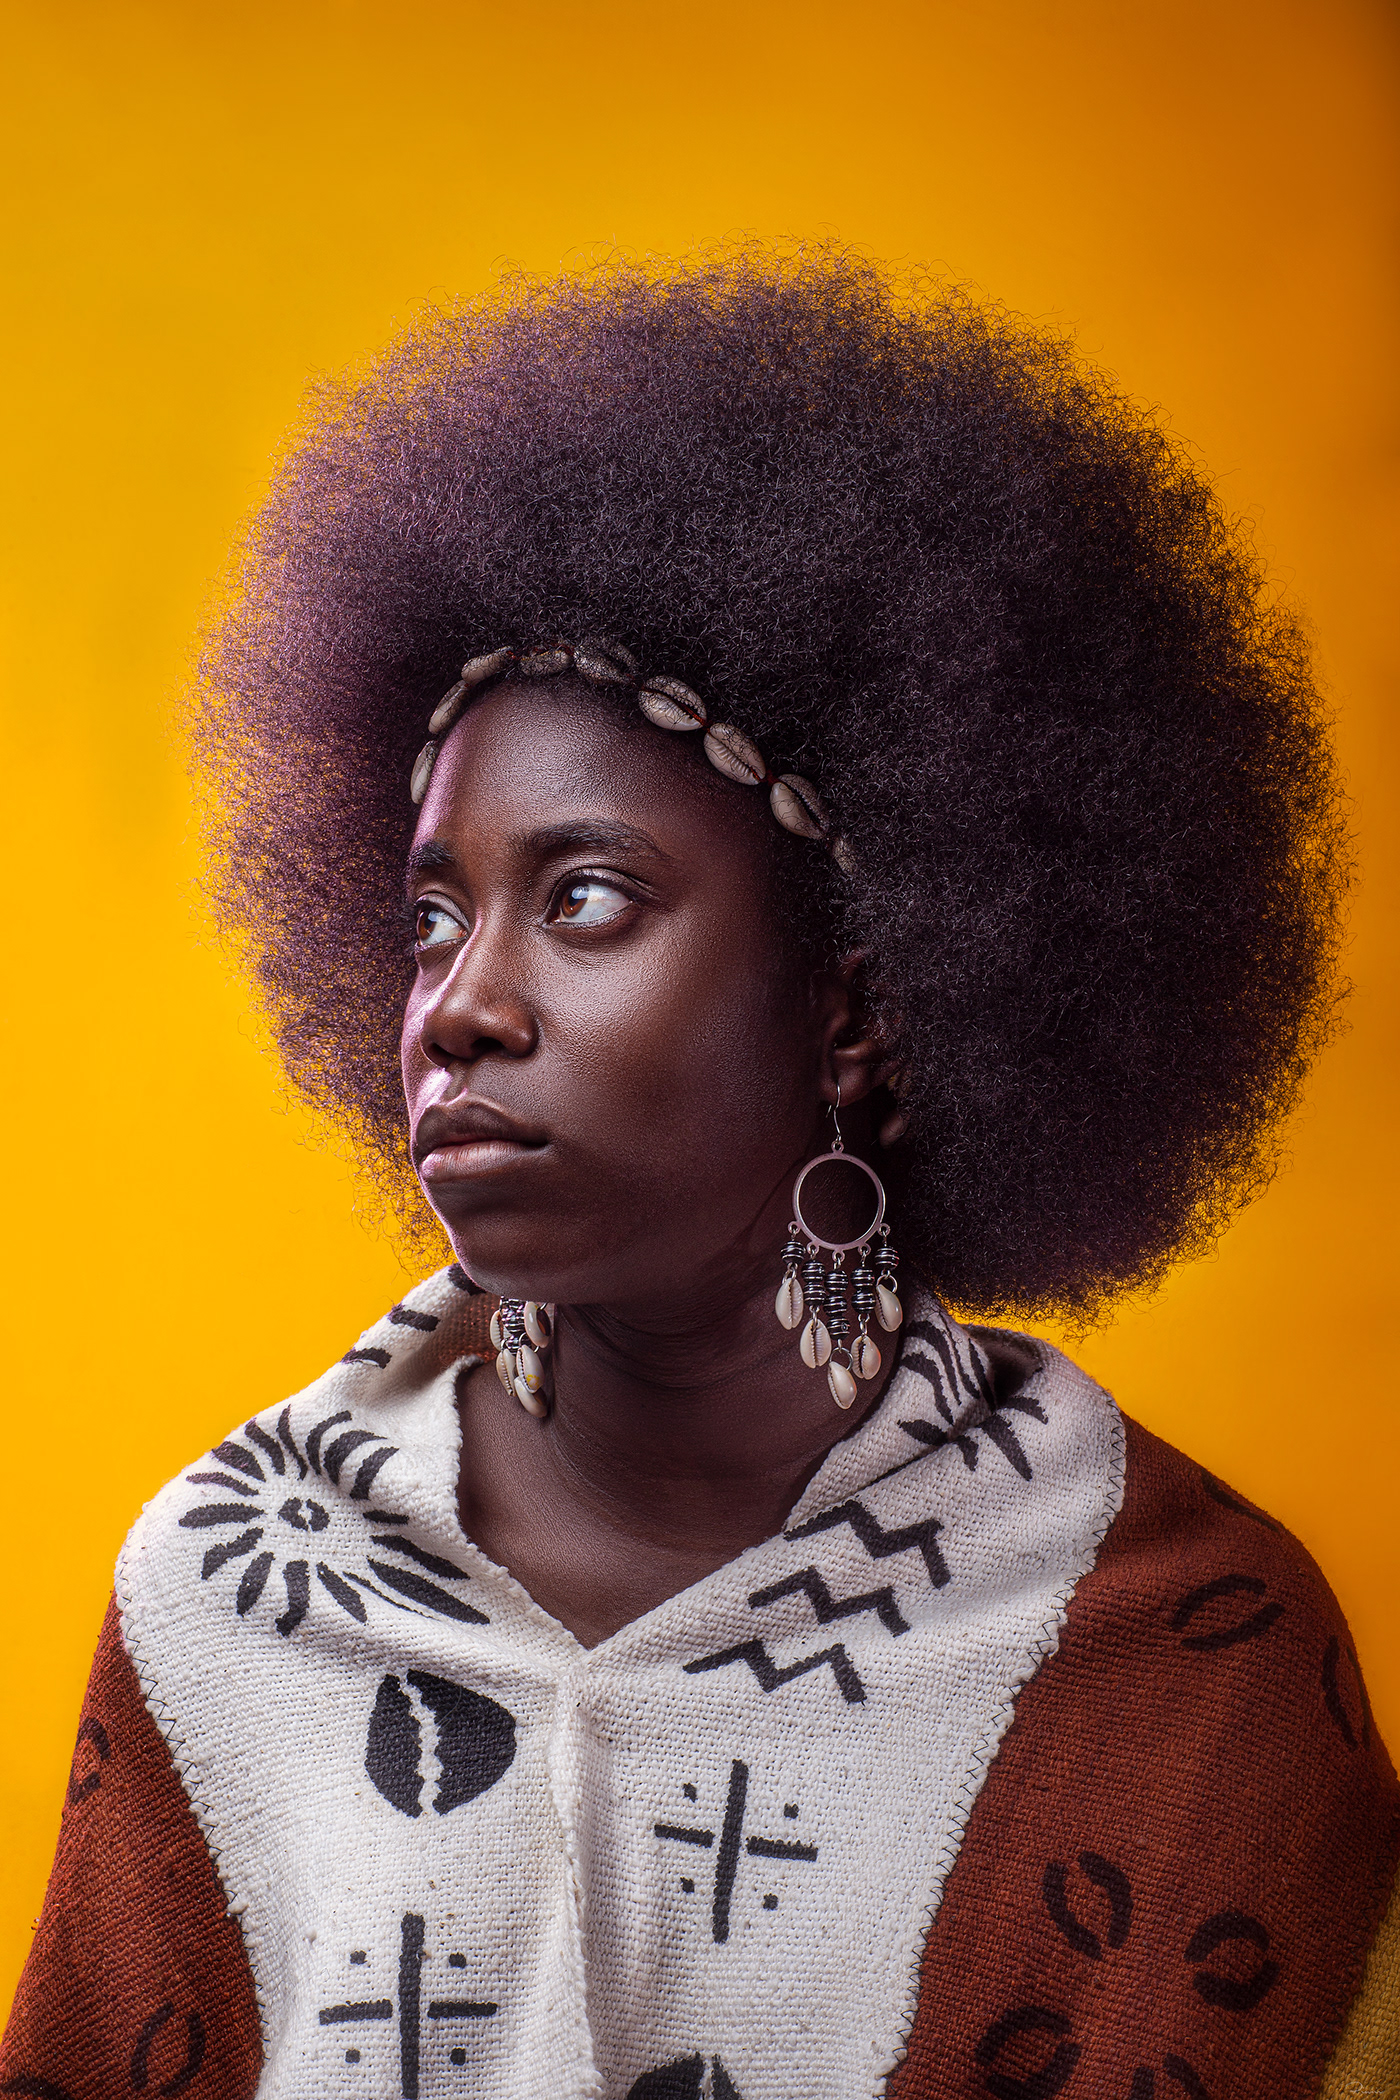 African Art afro beauty black hair human face photoshoot portrait woman